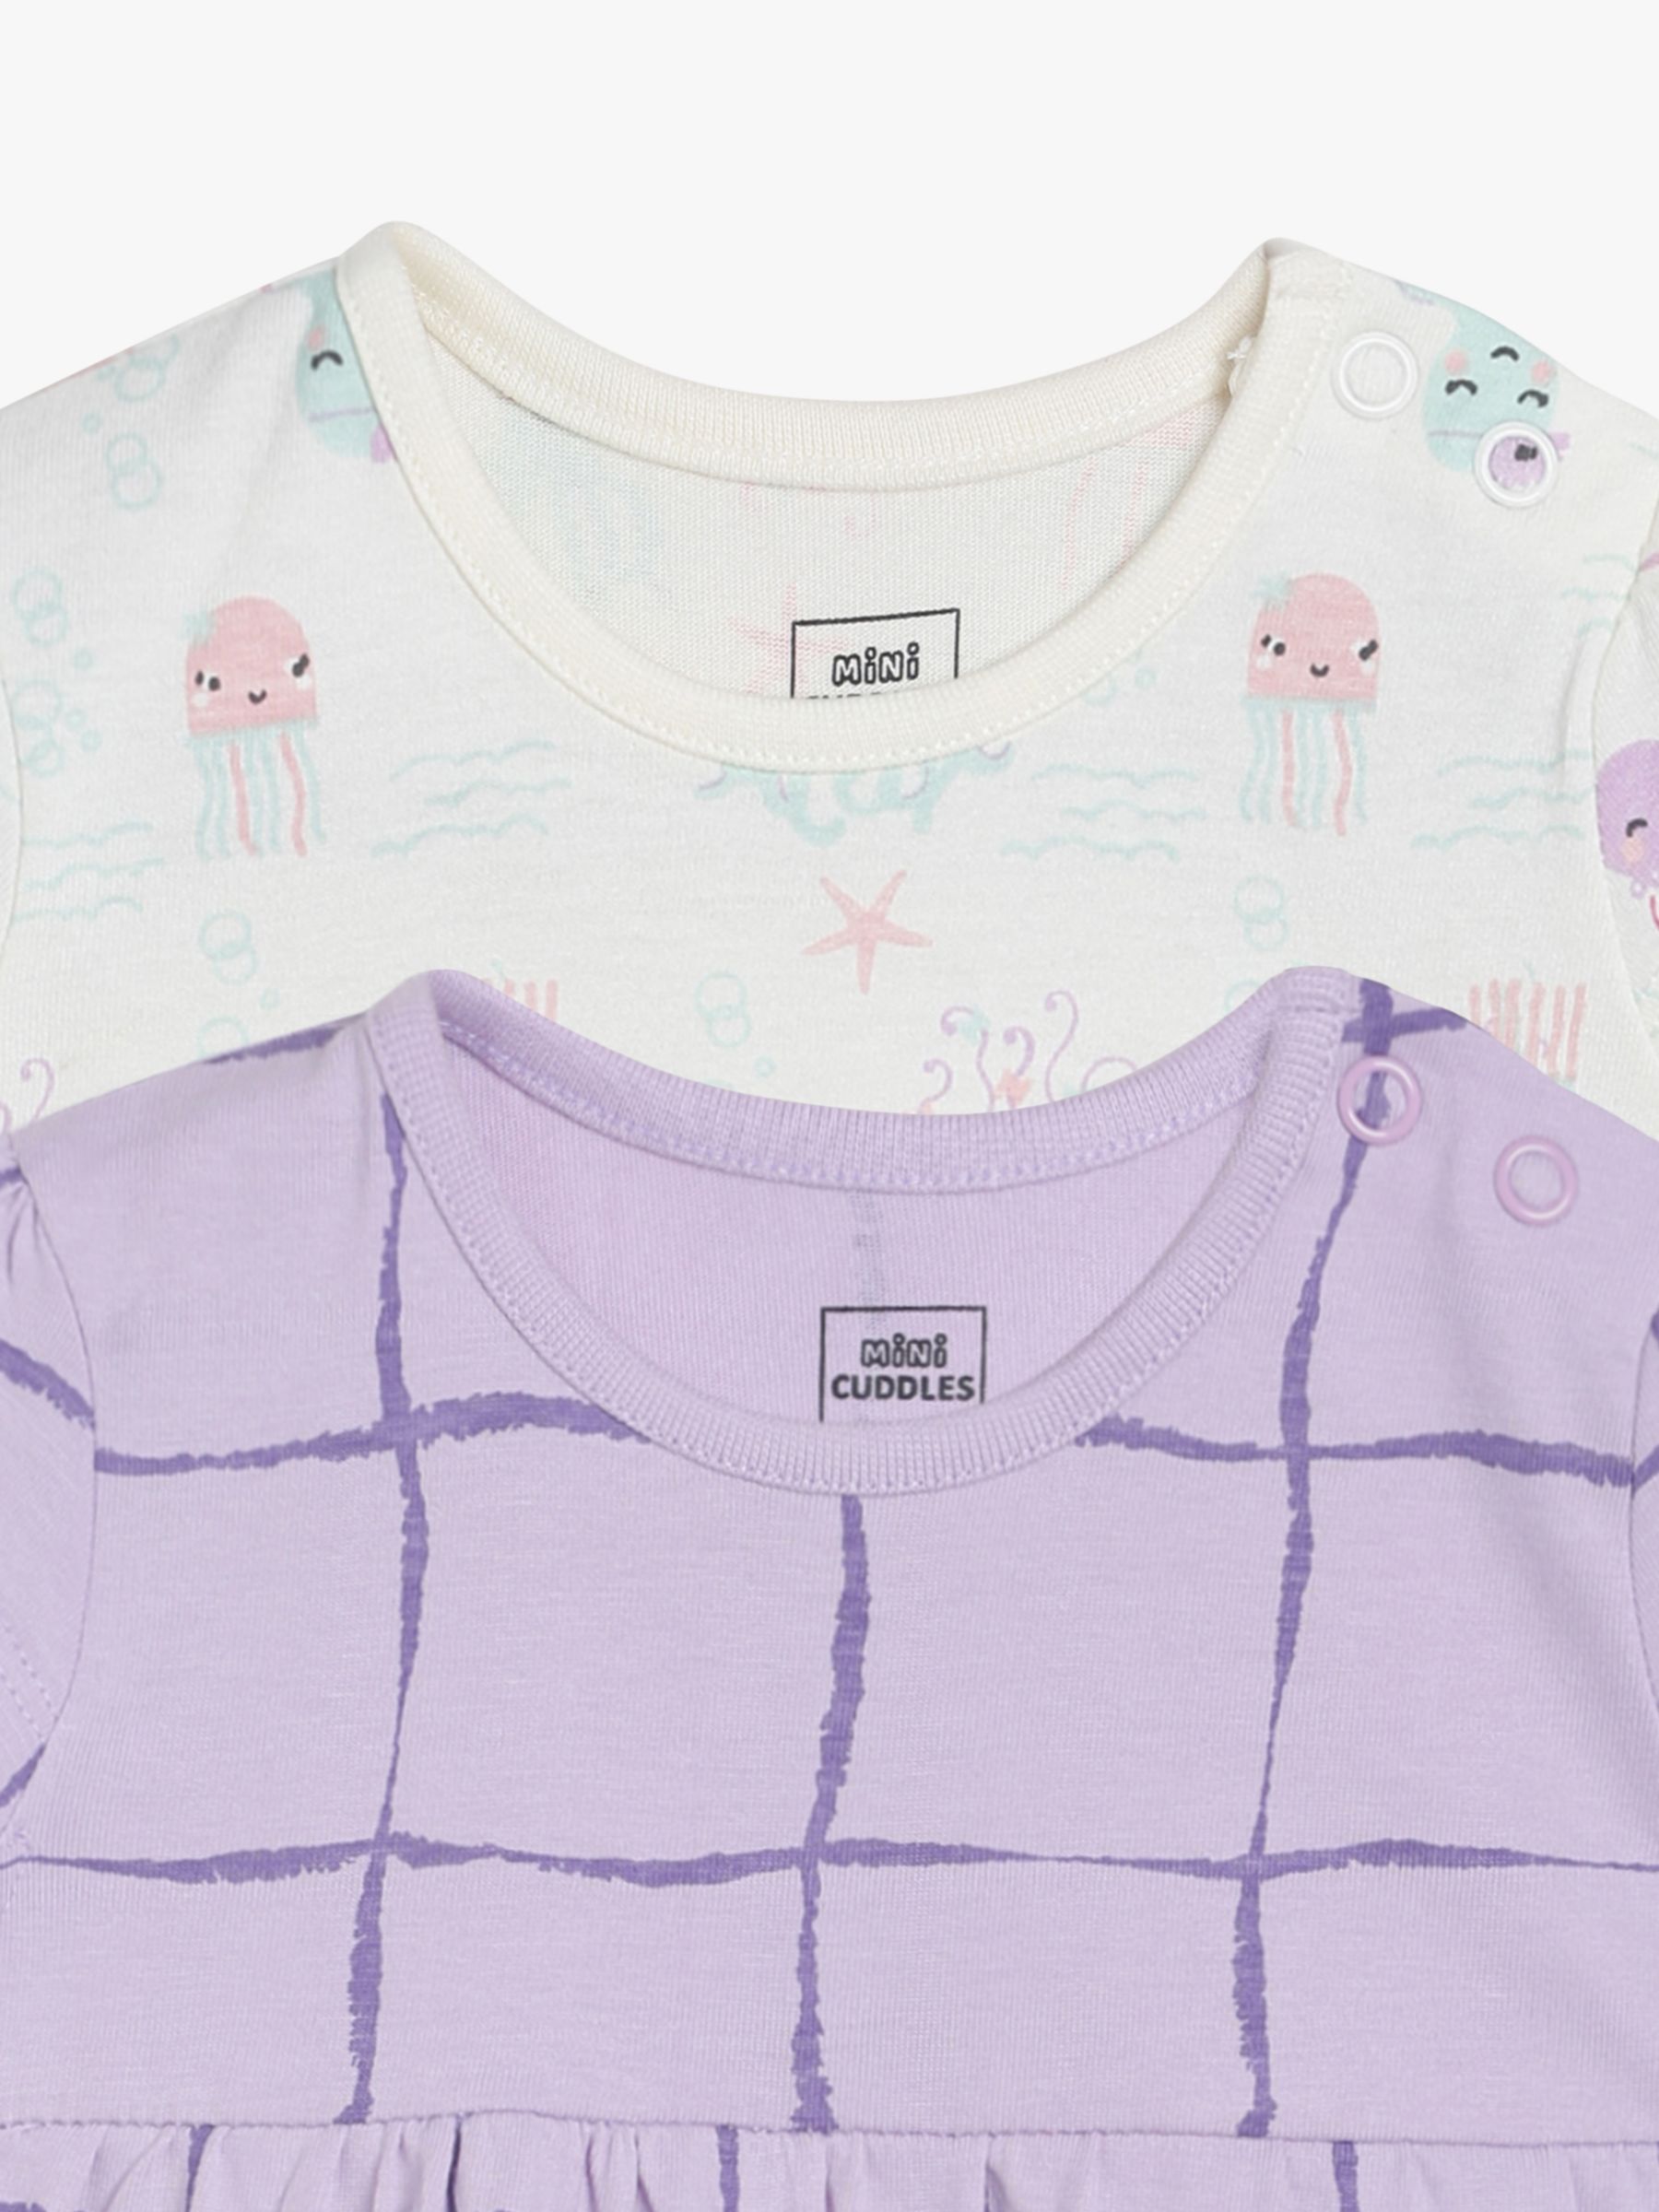 Mini Cuddles Baby Under The Sea Dress, Pack of 2, Purple/Multi